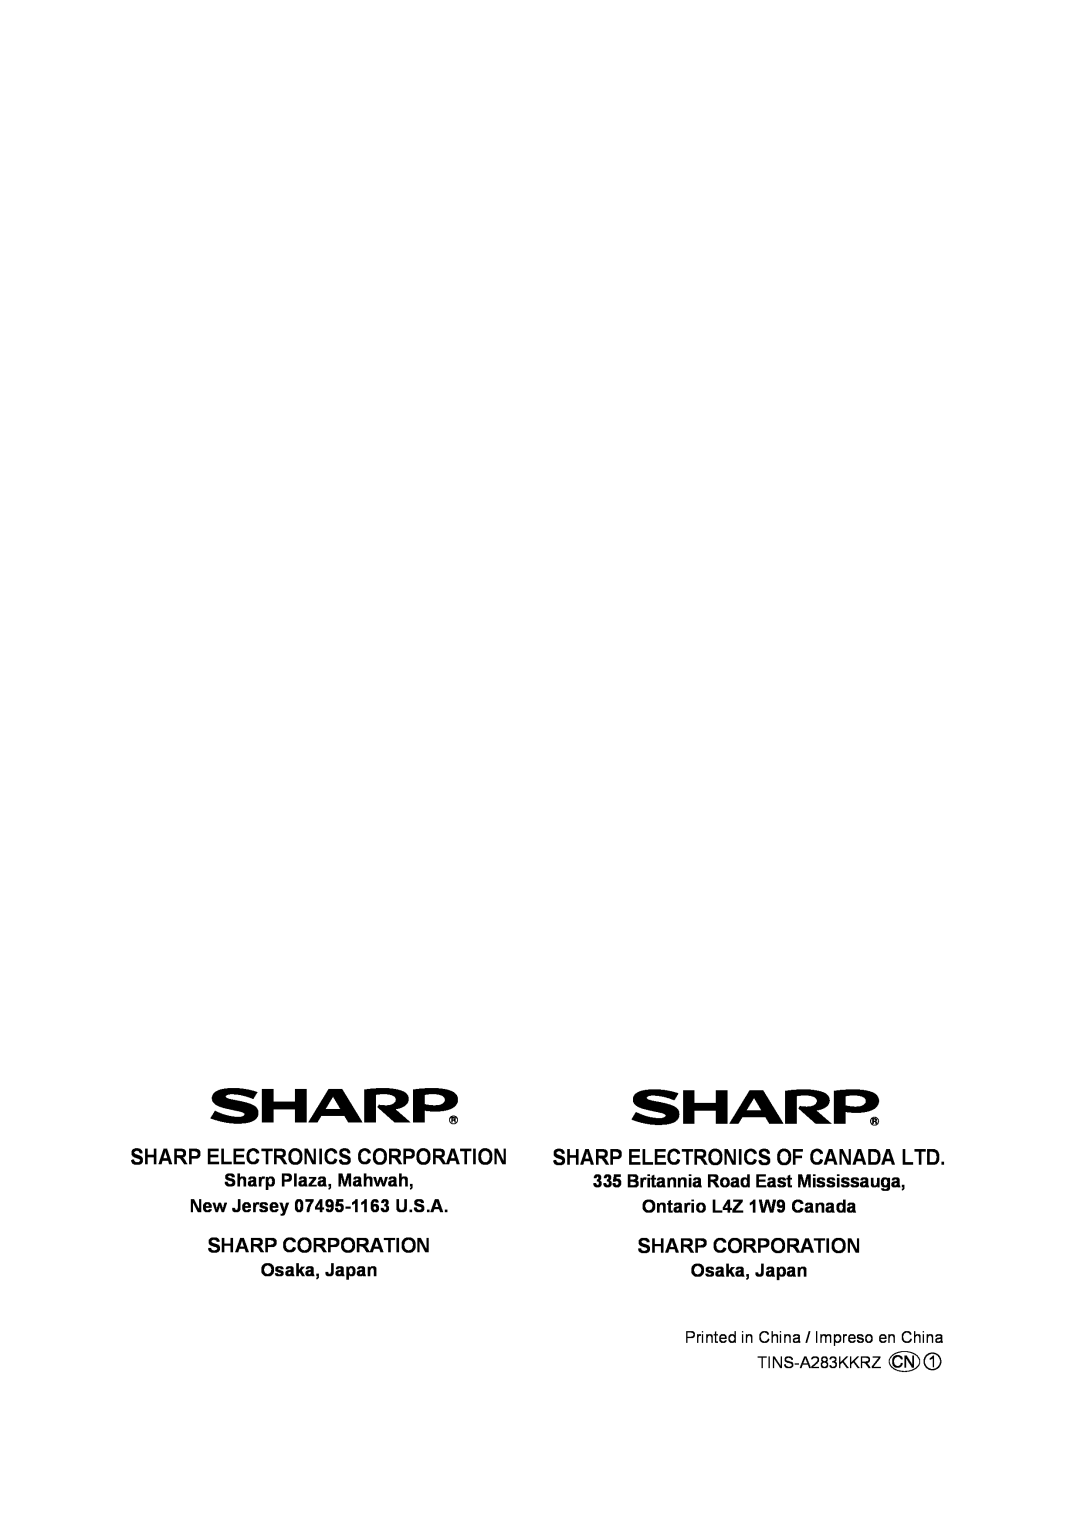 Sharp KC-860U Sharp Electronics Corporation, Sharp Electronics Of Canada Ltd, Sharp Corporation, Sharp Plaza, Mahwah 